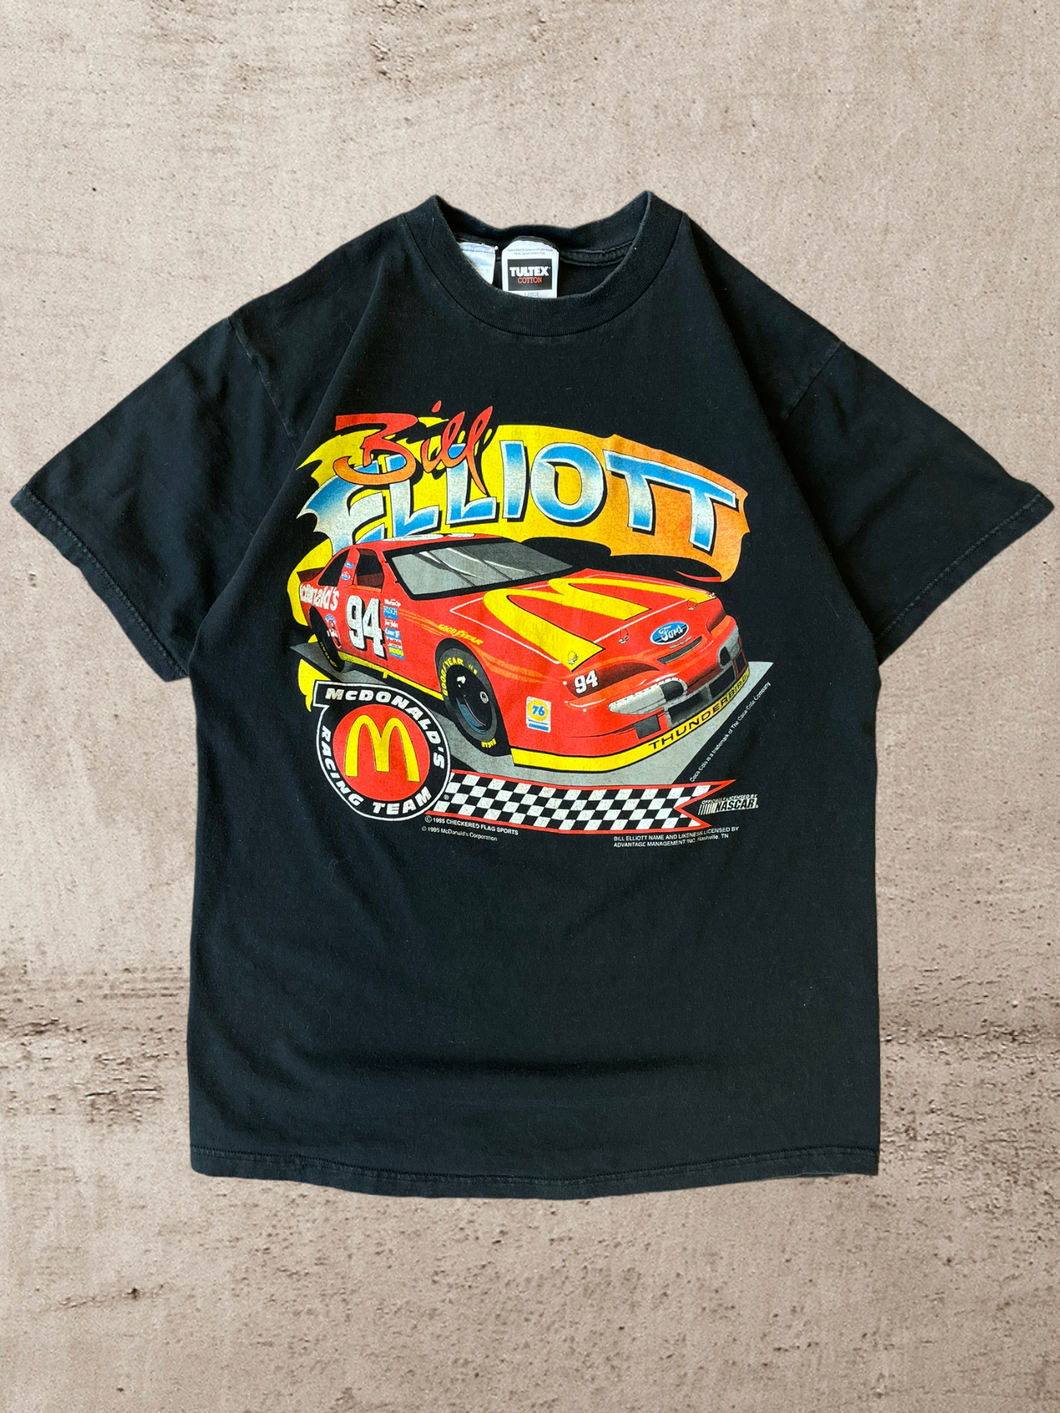 1995 Bill Elliott McDonalds Racing T-Shirt - Large